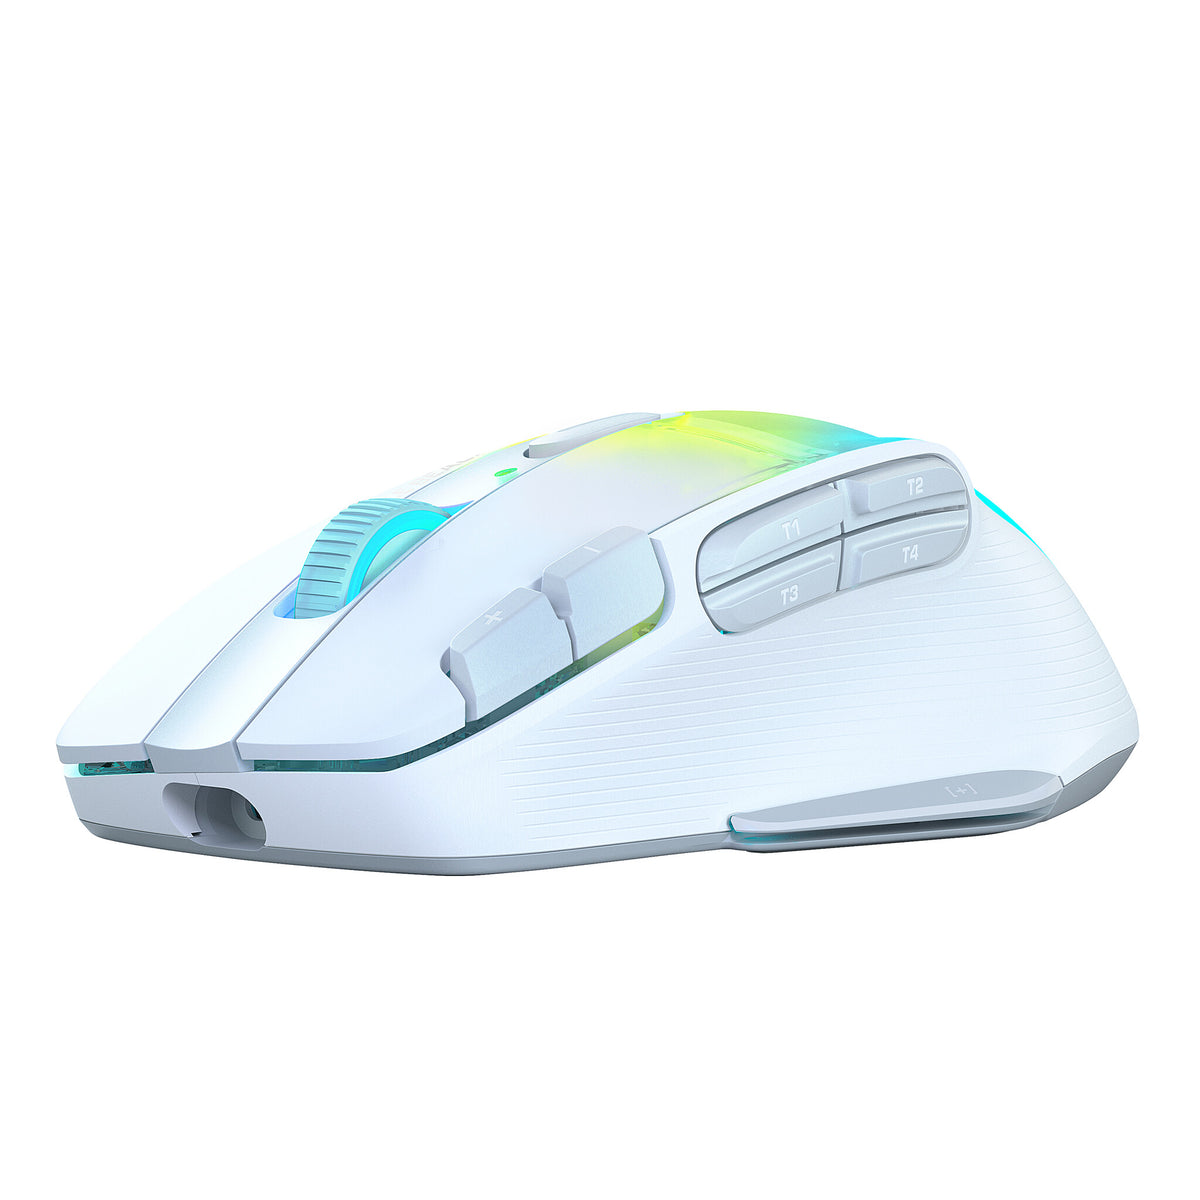 Turtle Beach Kone XP Air - RF Wireless + Bluetooth Optical Gaming Mouse in White - 19,000 DPI